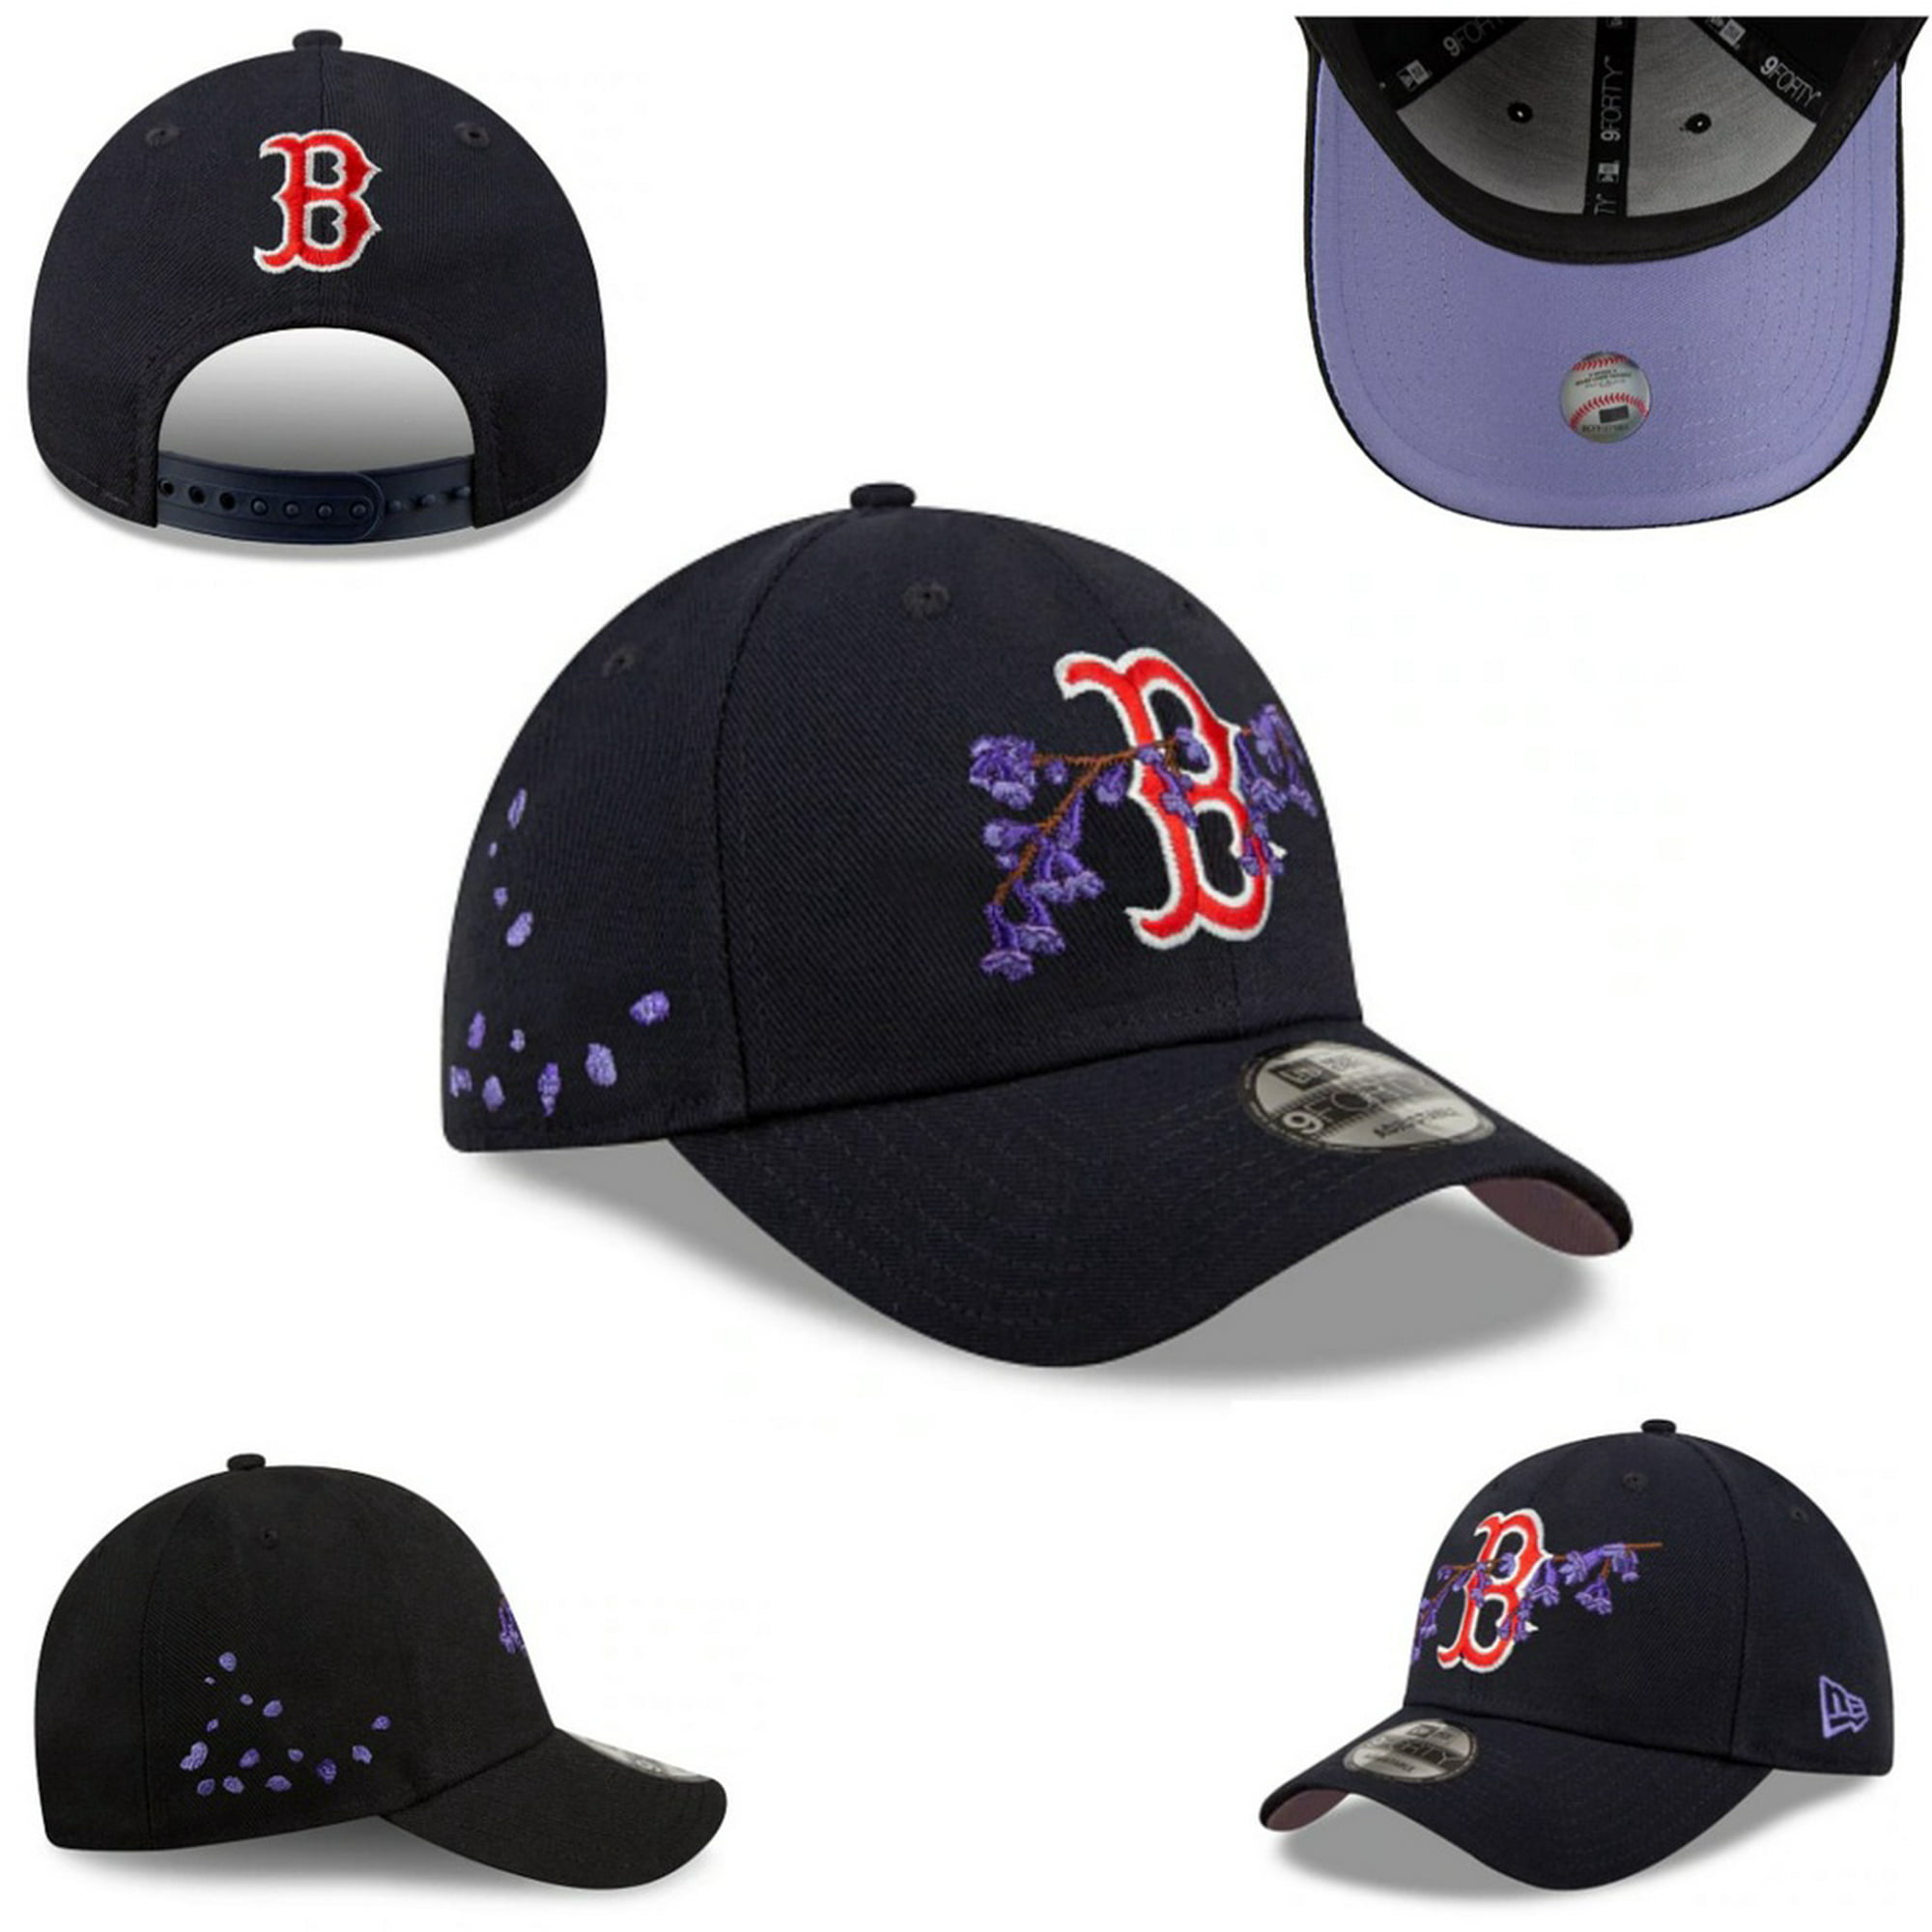 MLB Gorra LA Snapback Unisex Sombreros De Alta Calidad Para Sol De Béisbol  Hiphop Fan Regalos